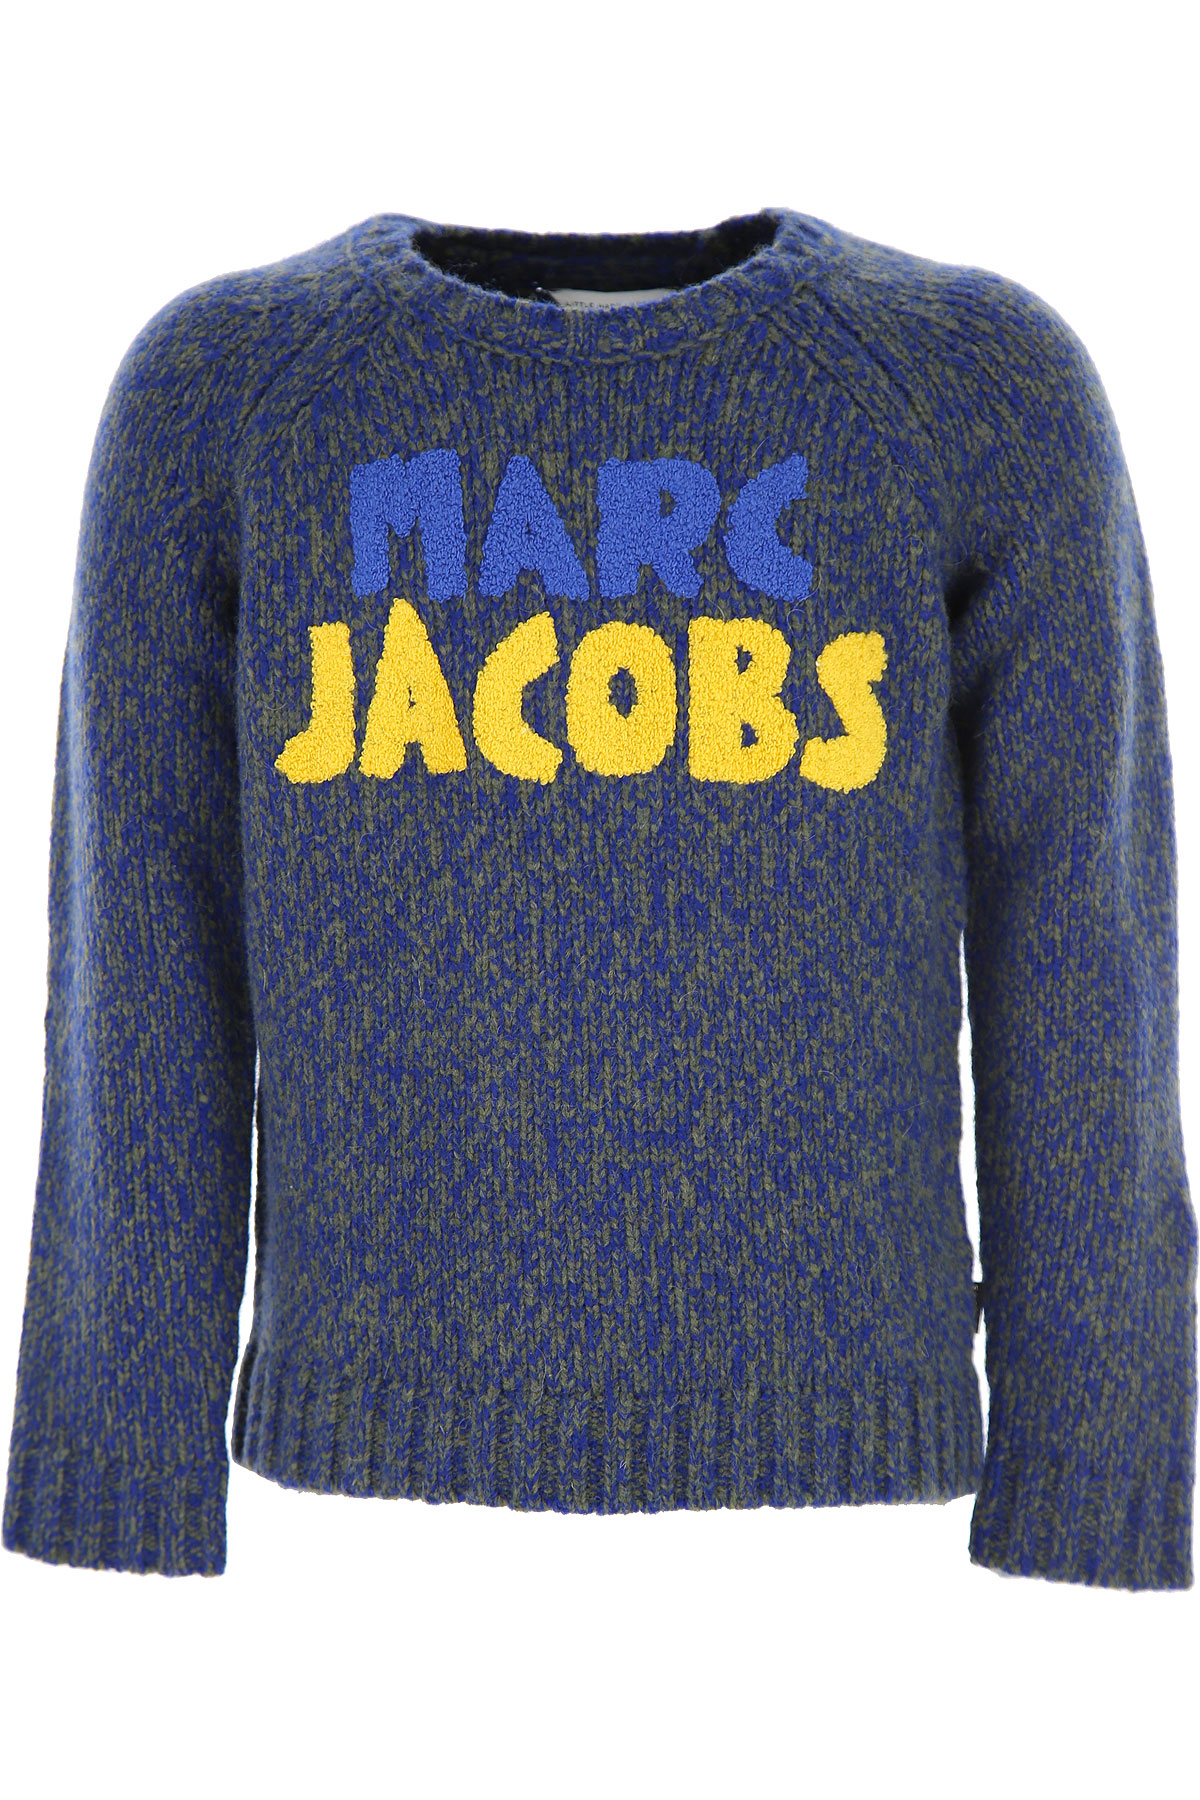 Marc Jacobs Kinder Pullover für Jungen Günstig im Sale, Blau, Wolle, 2017, 10Y 12Y 14Y 2Y 3Y 4Y 6Y 8Y